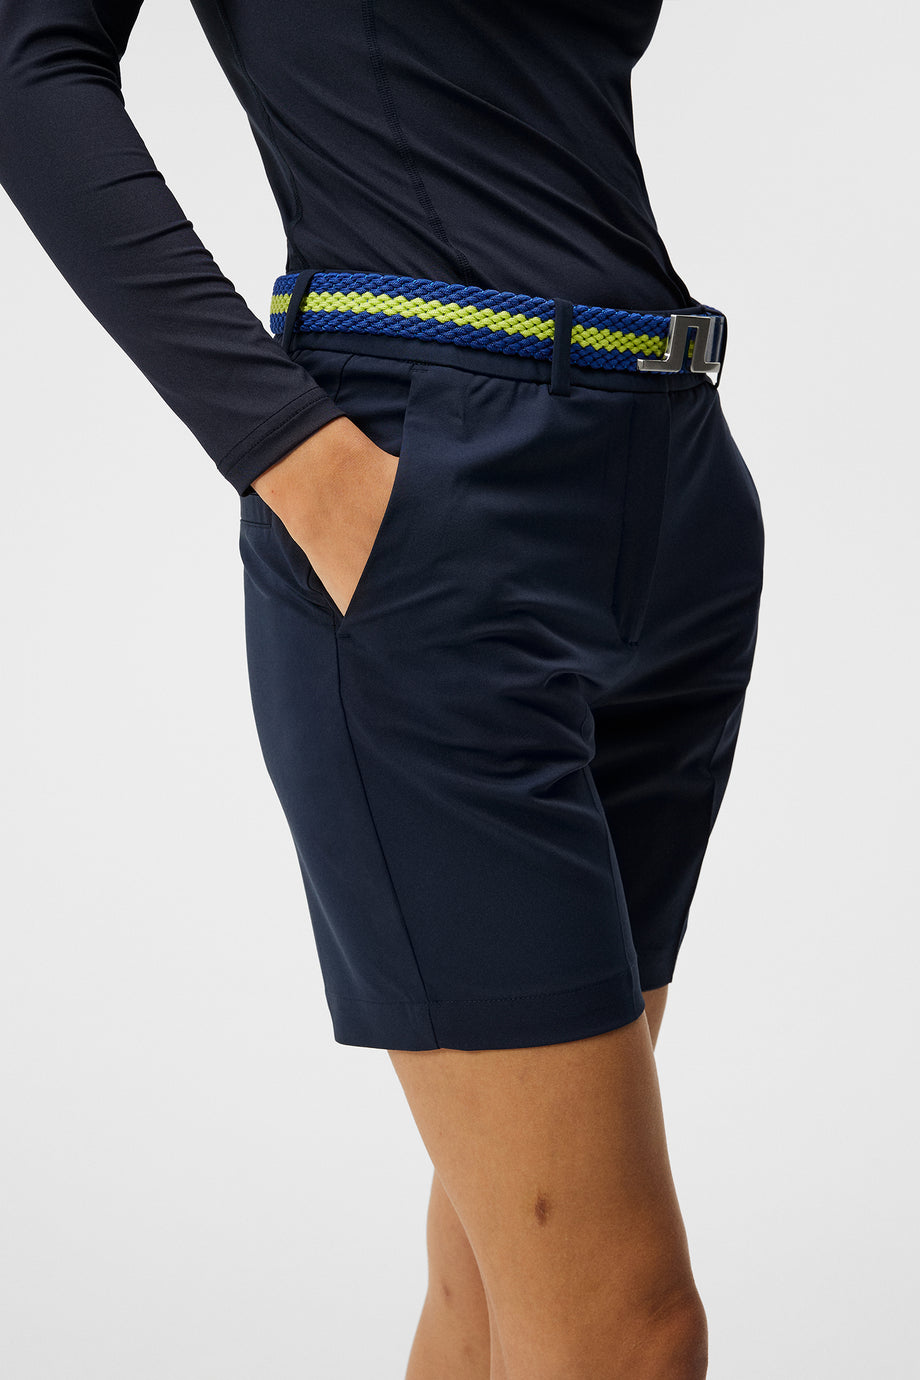 Gwen Long Shorts / JL Navy